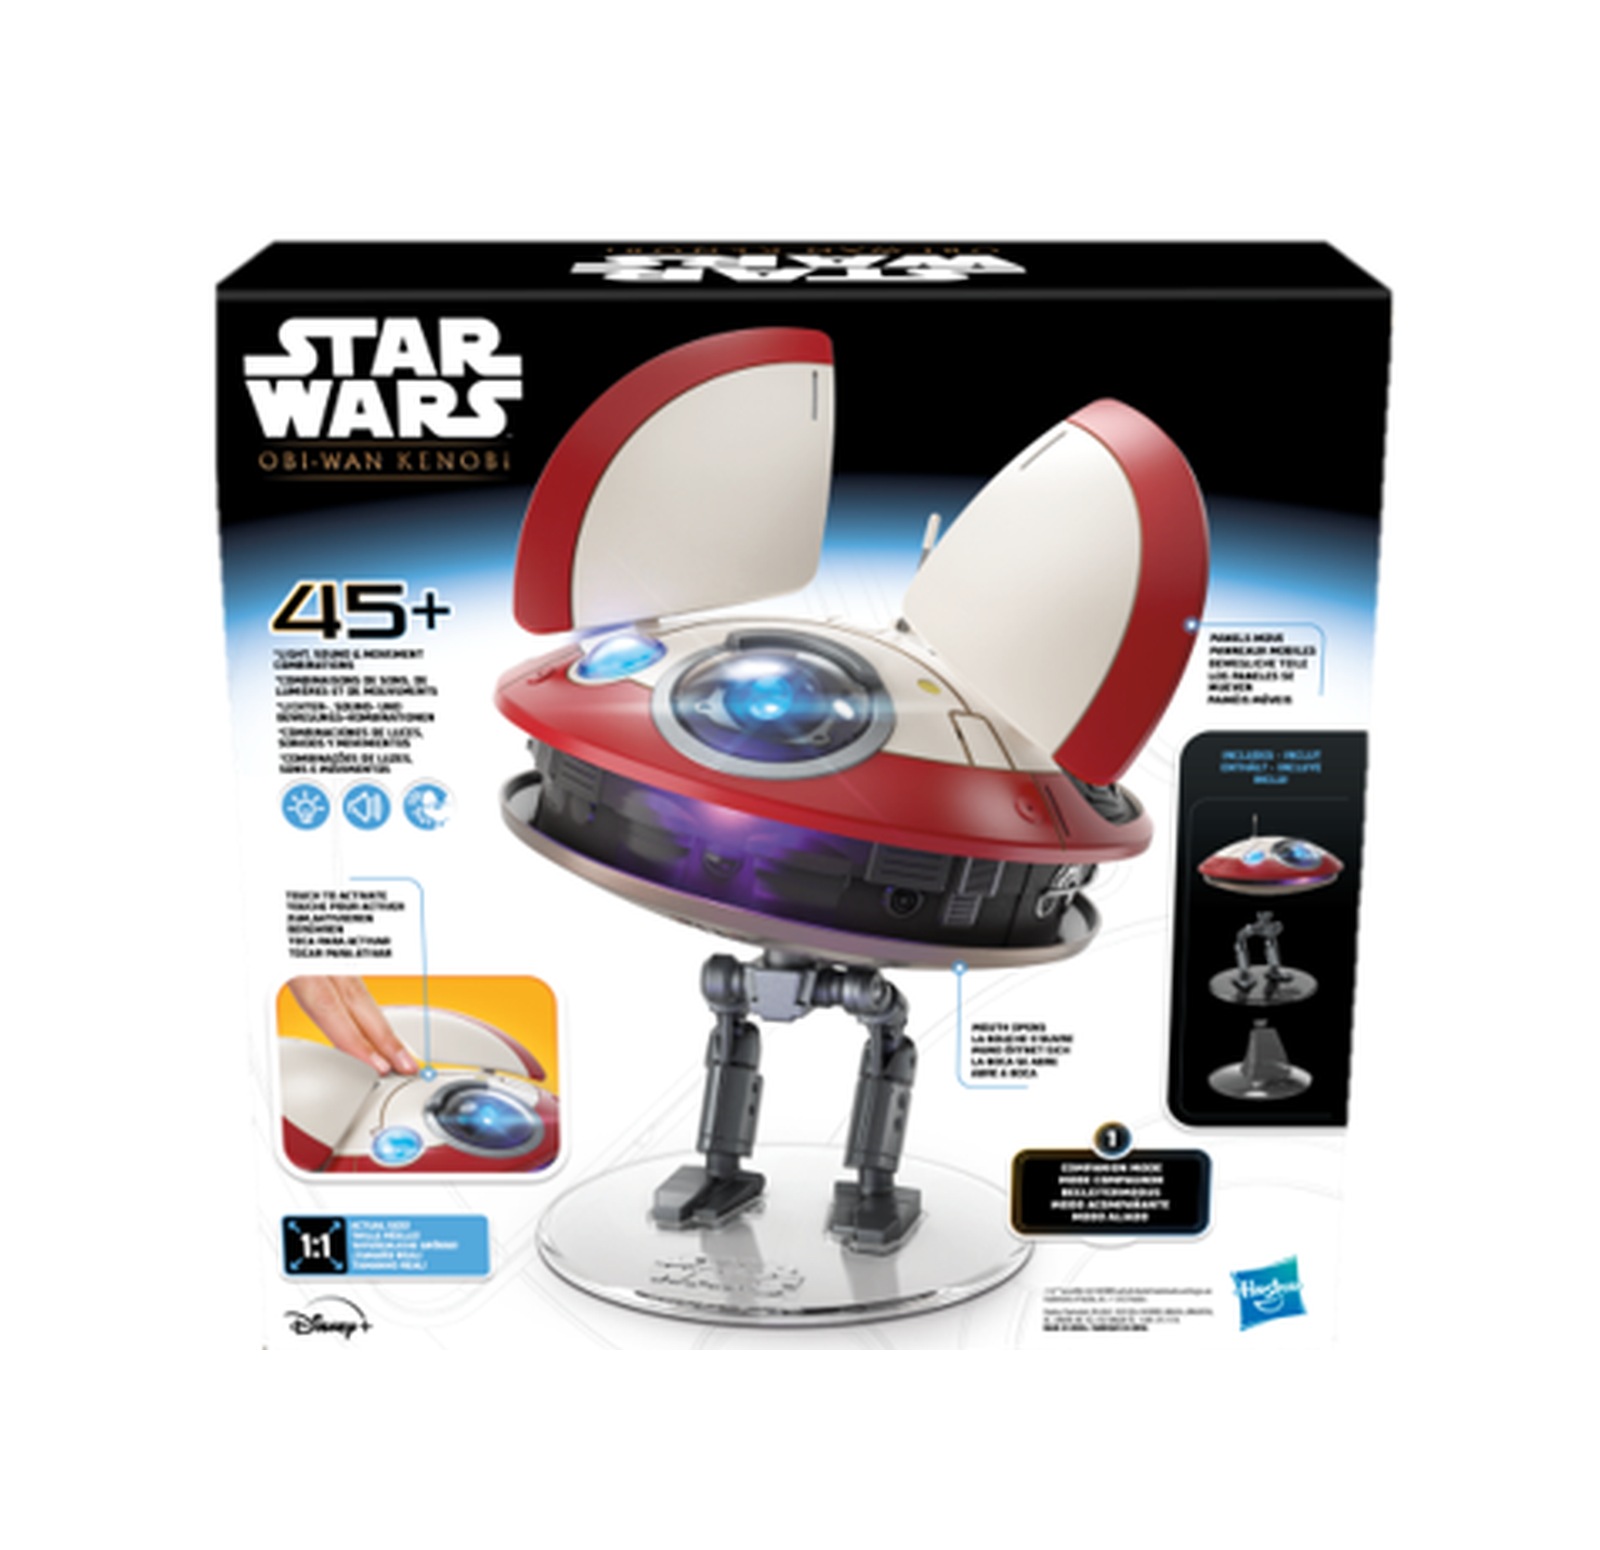 Star wars, l0-la59 (lola) animatronic edition, droide elettronico ispirato alla serie "obi-wan kenobi" - Star Wars